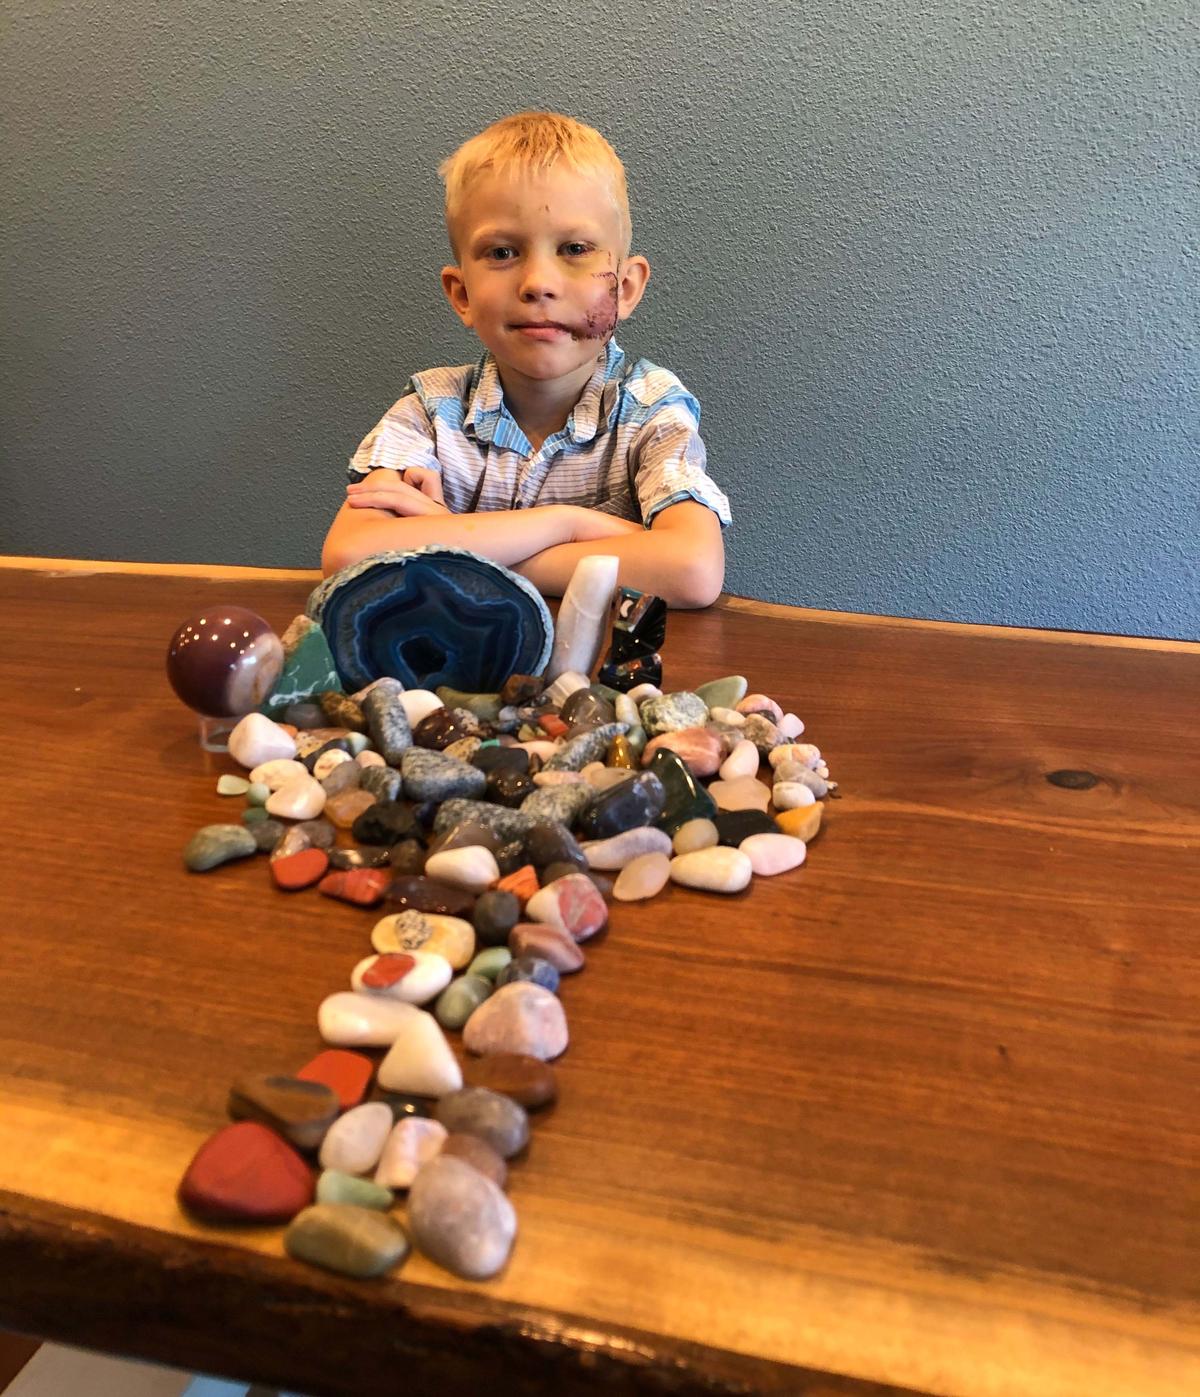 Bridger's aunt commented the the boy loves rocks. (Courtesy of Robert J. Walker)